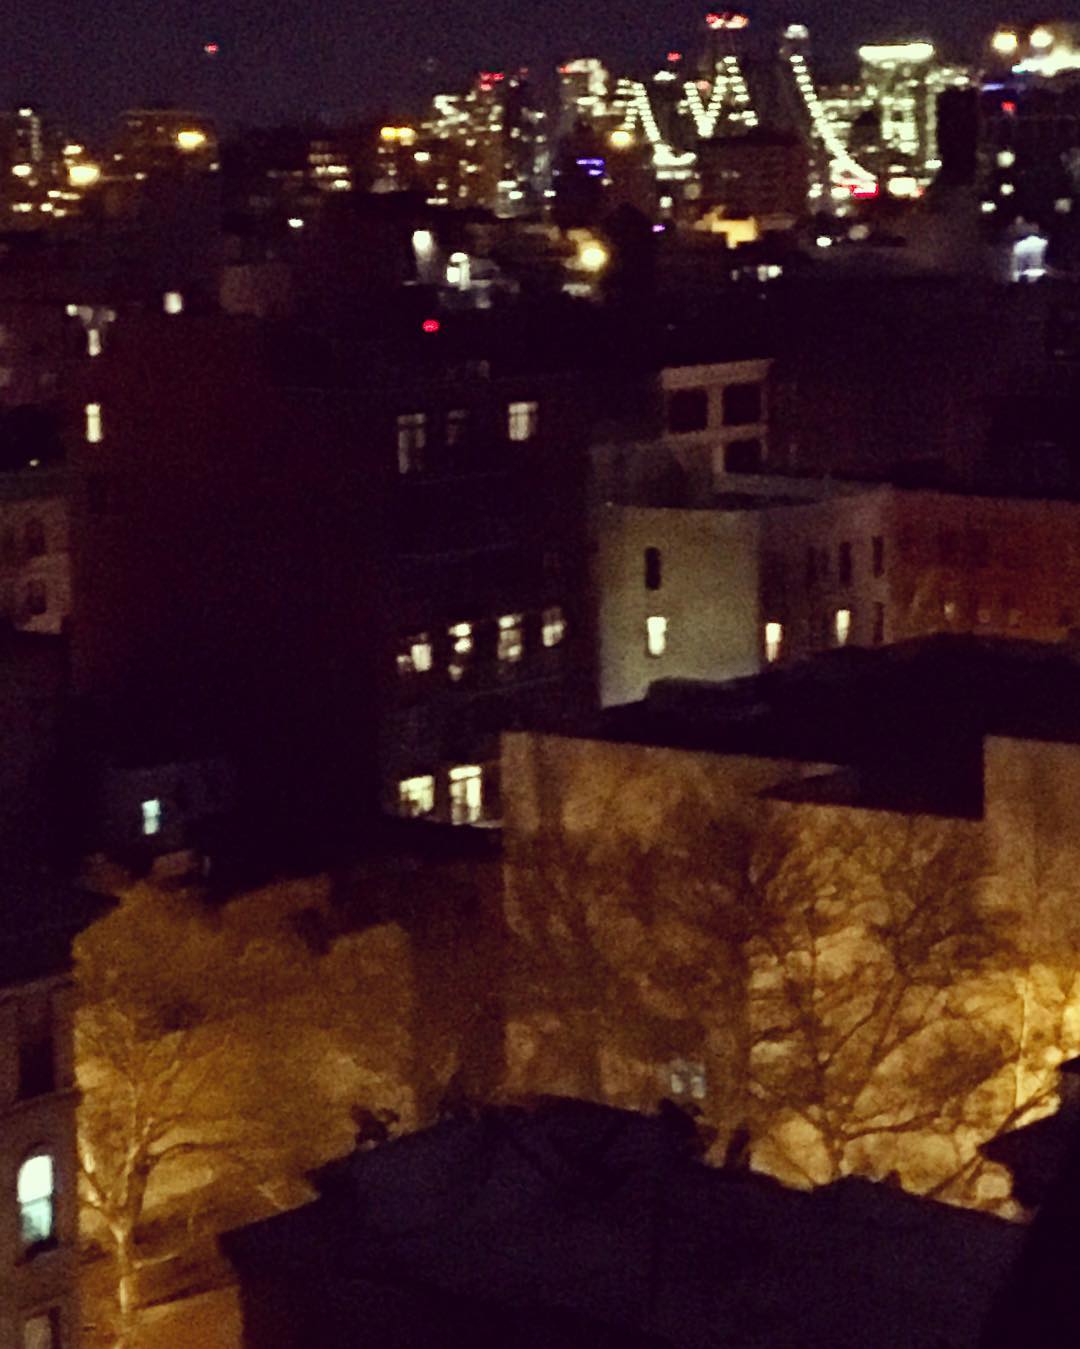 #newyorkatnight view 1 #manhattan #dowtown fire escape party view #prettyprettynewyorkcity #brooklynbridge